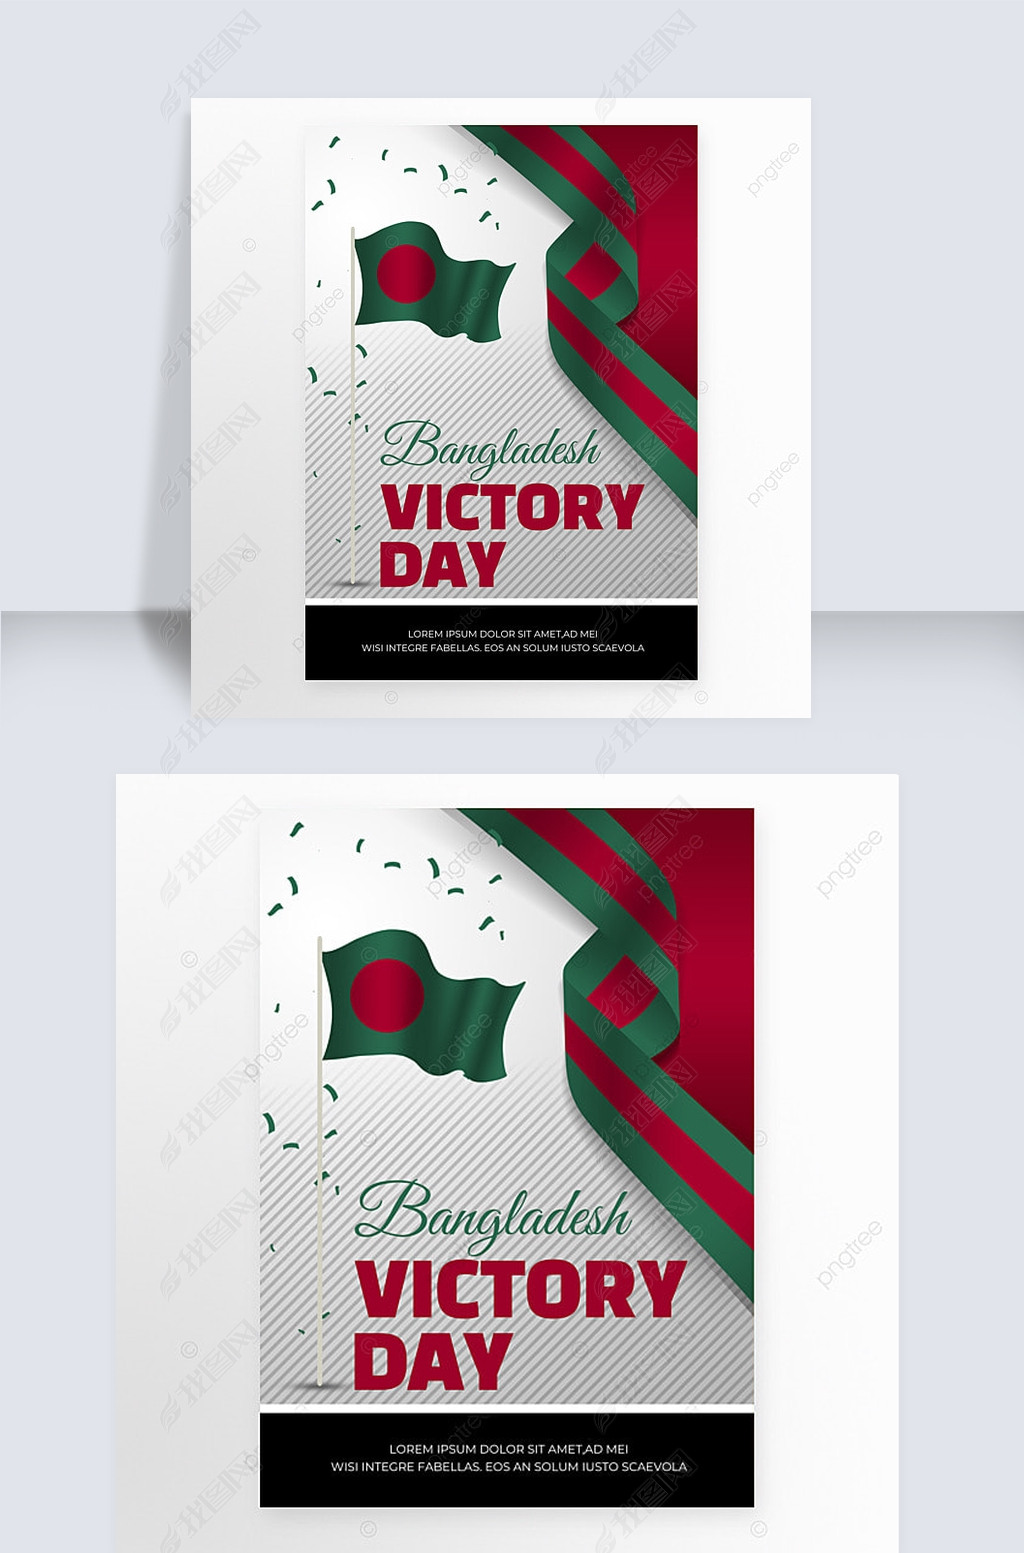 bangladesh victory day red flag